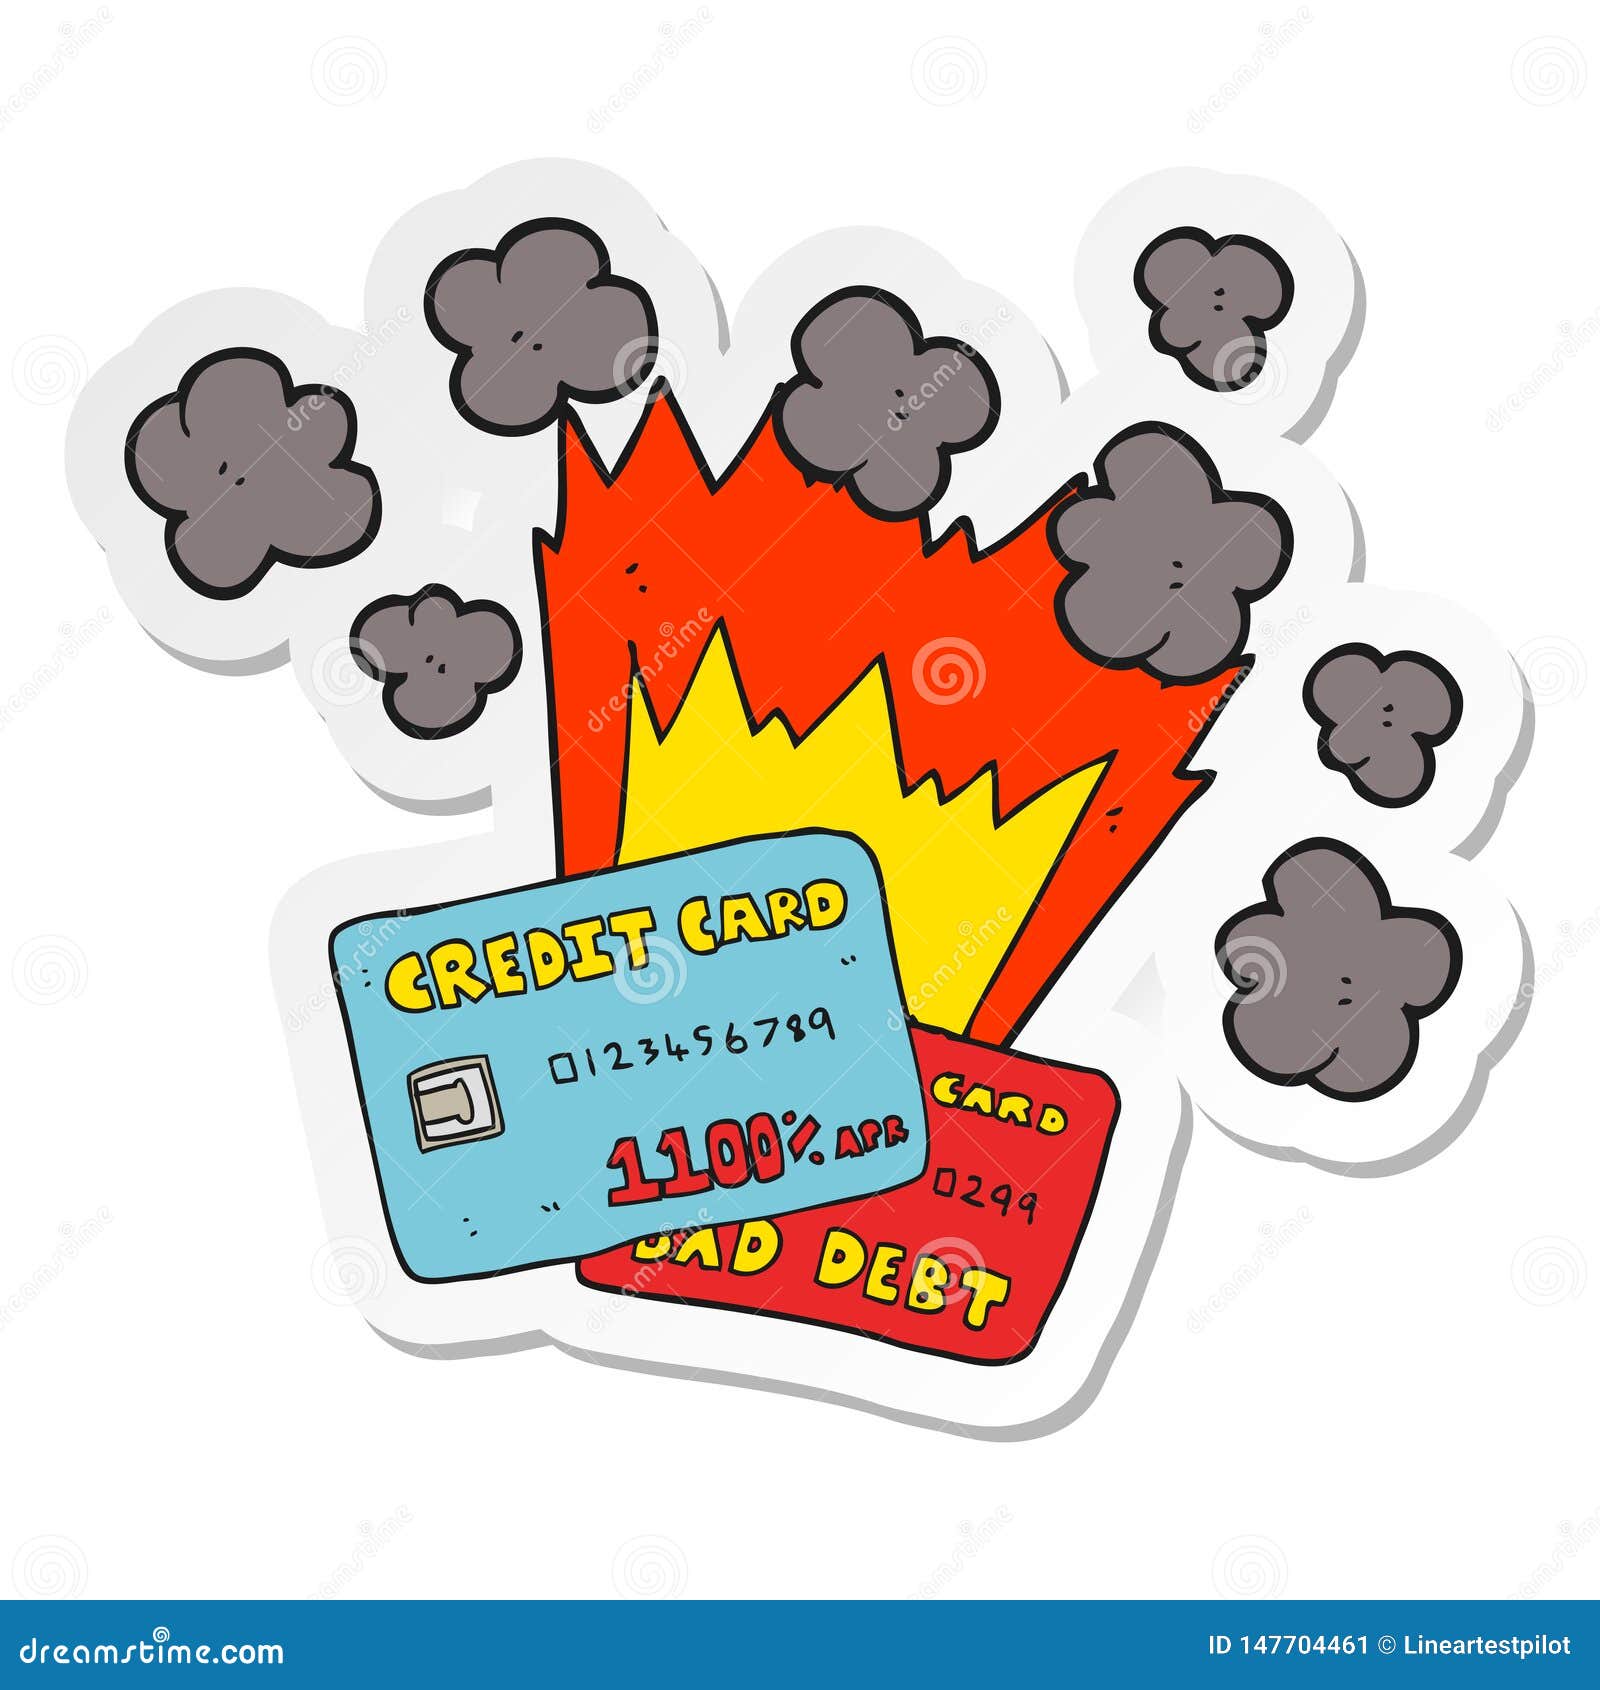 Sticker of a Cartoon Credit Card Debt Stock Vector - Illustration of